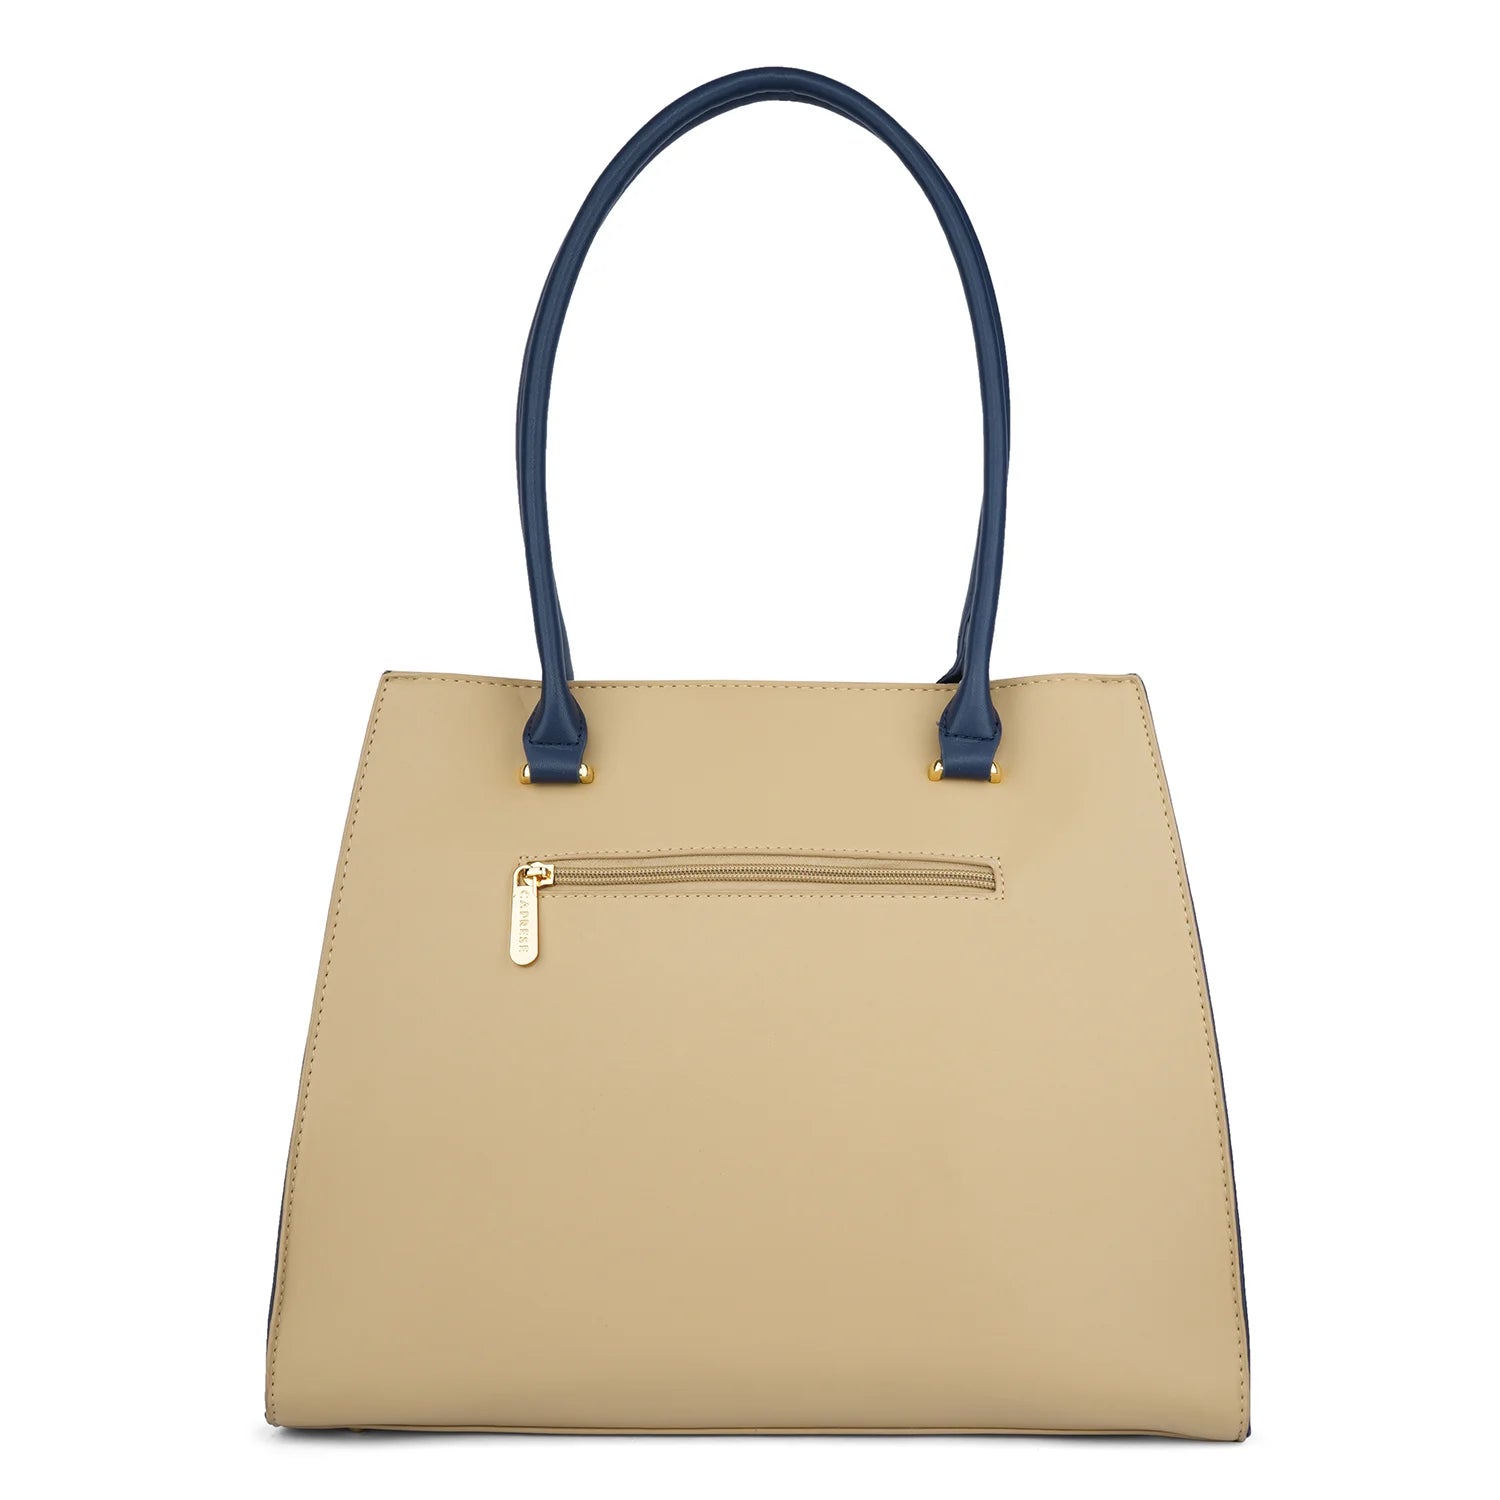 Buy Burgundy & Black Handbags for Women by CAPRESE Online | Ajio.com